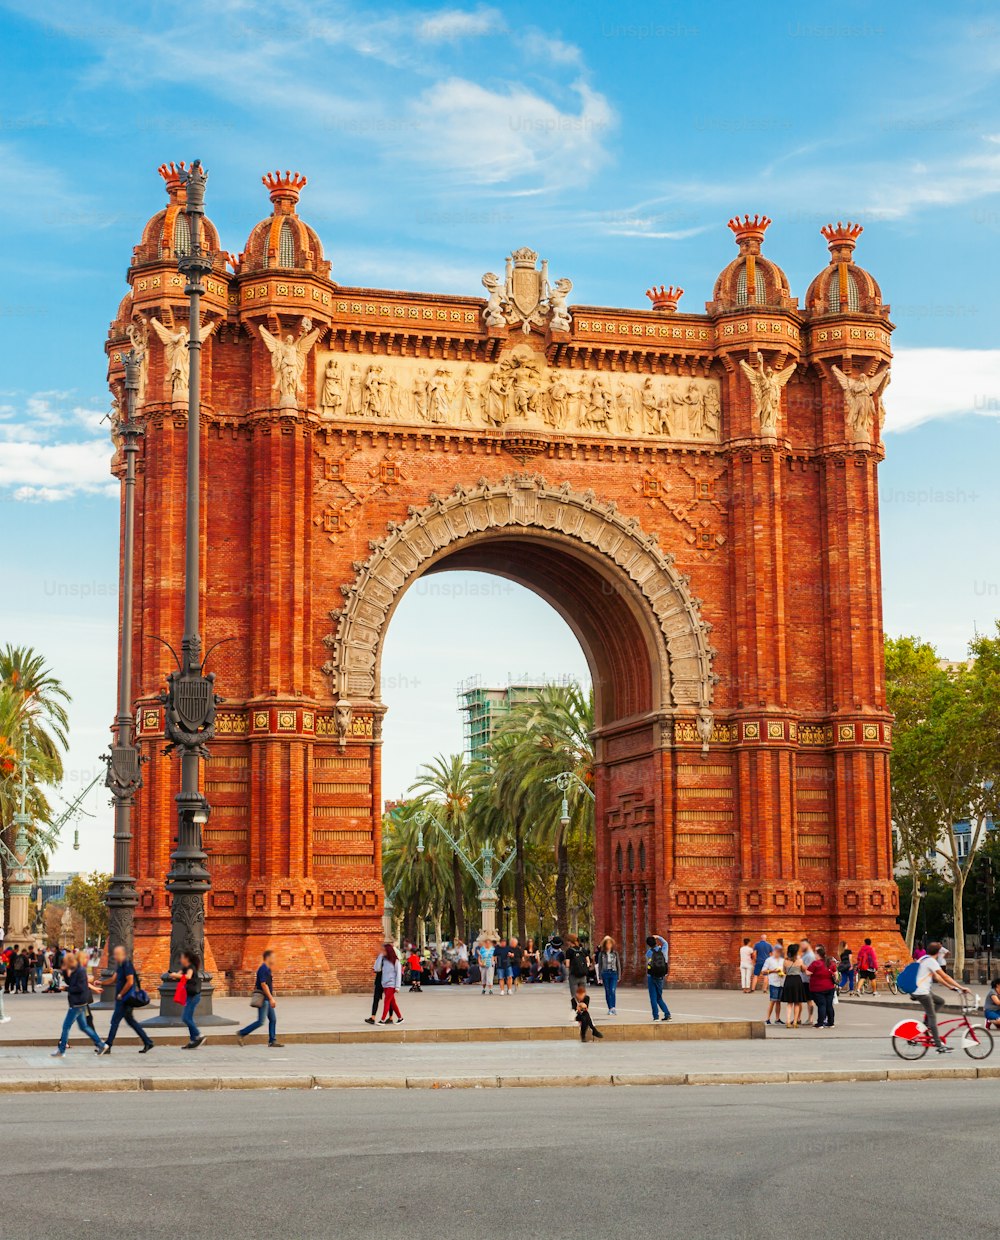 The Arc de Triomf or Arco de Triunfo is a triumphal arch in the city of Barcelona in Catalonia region of Spain